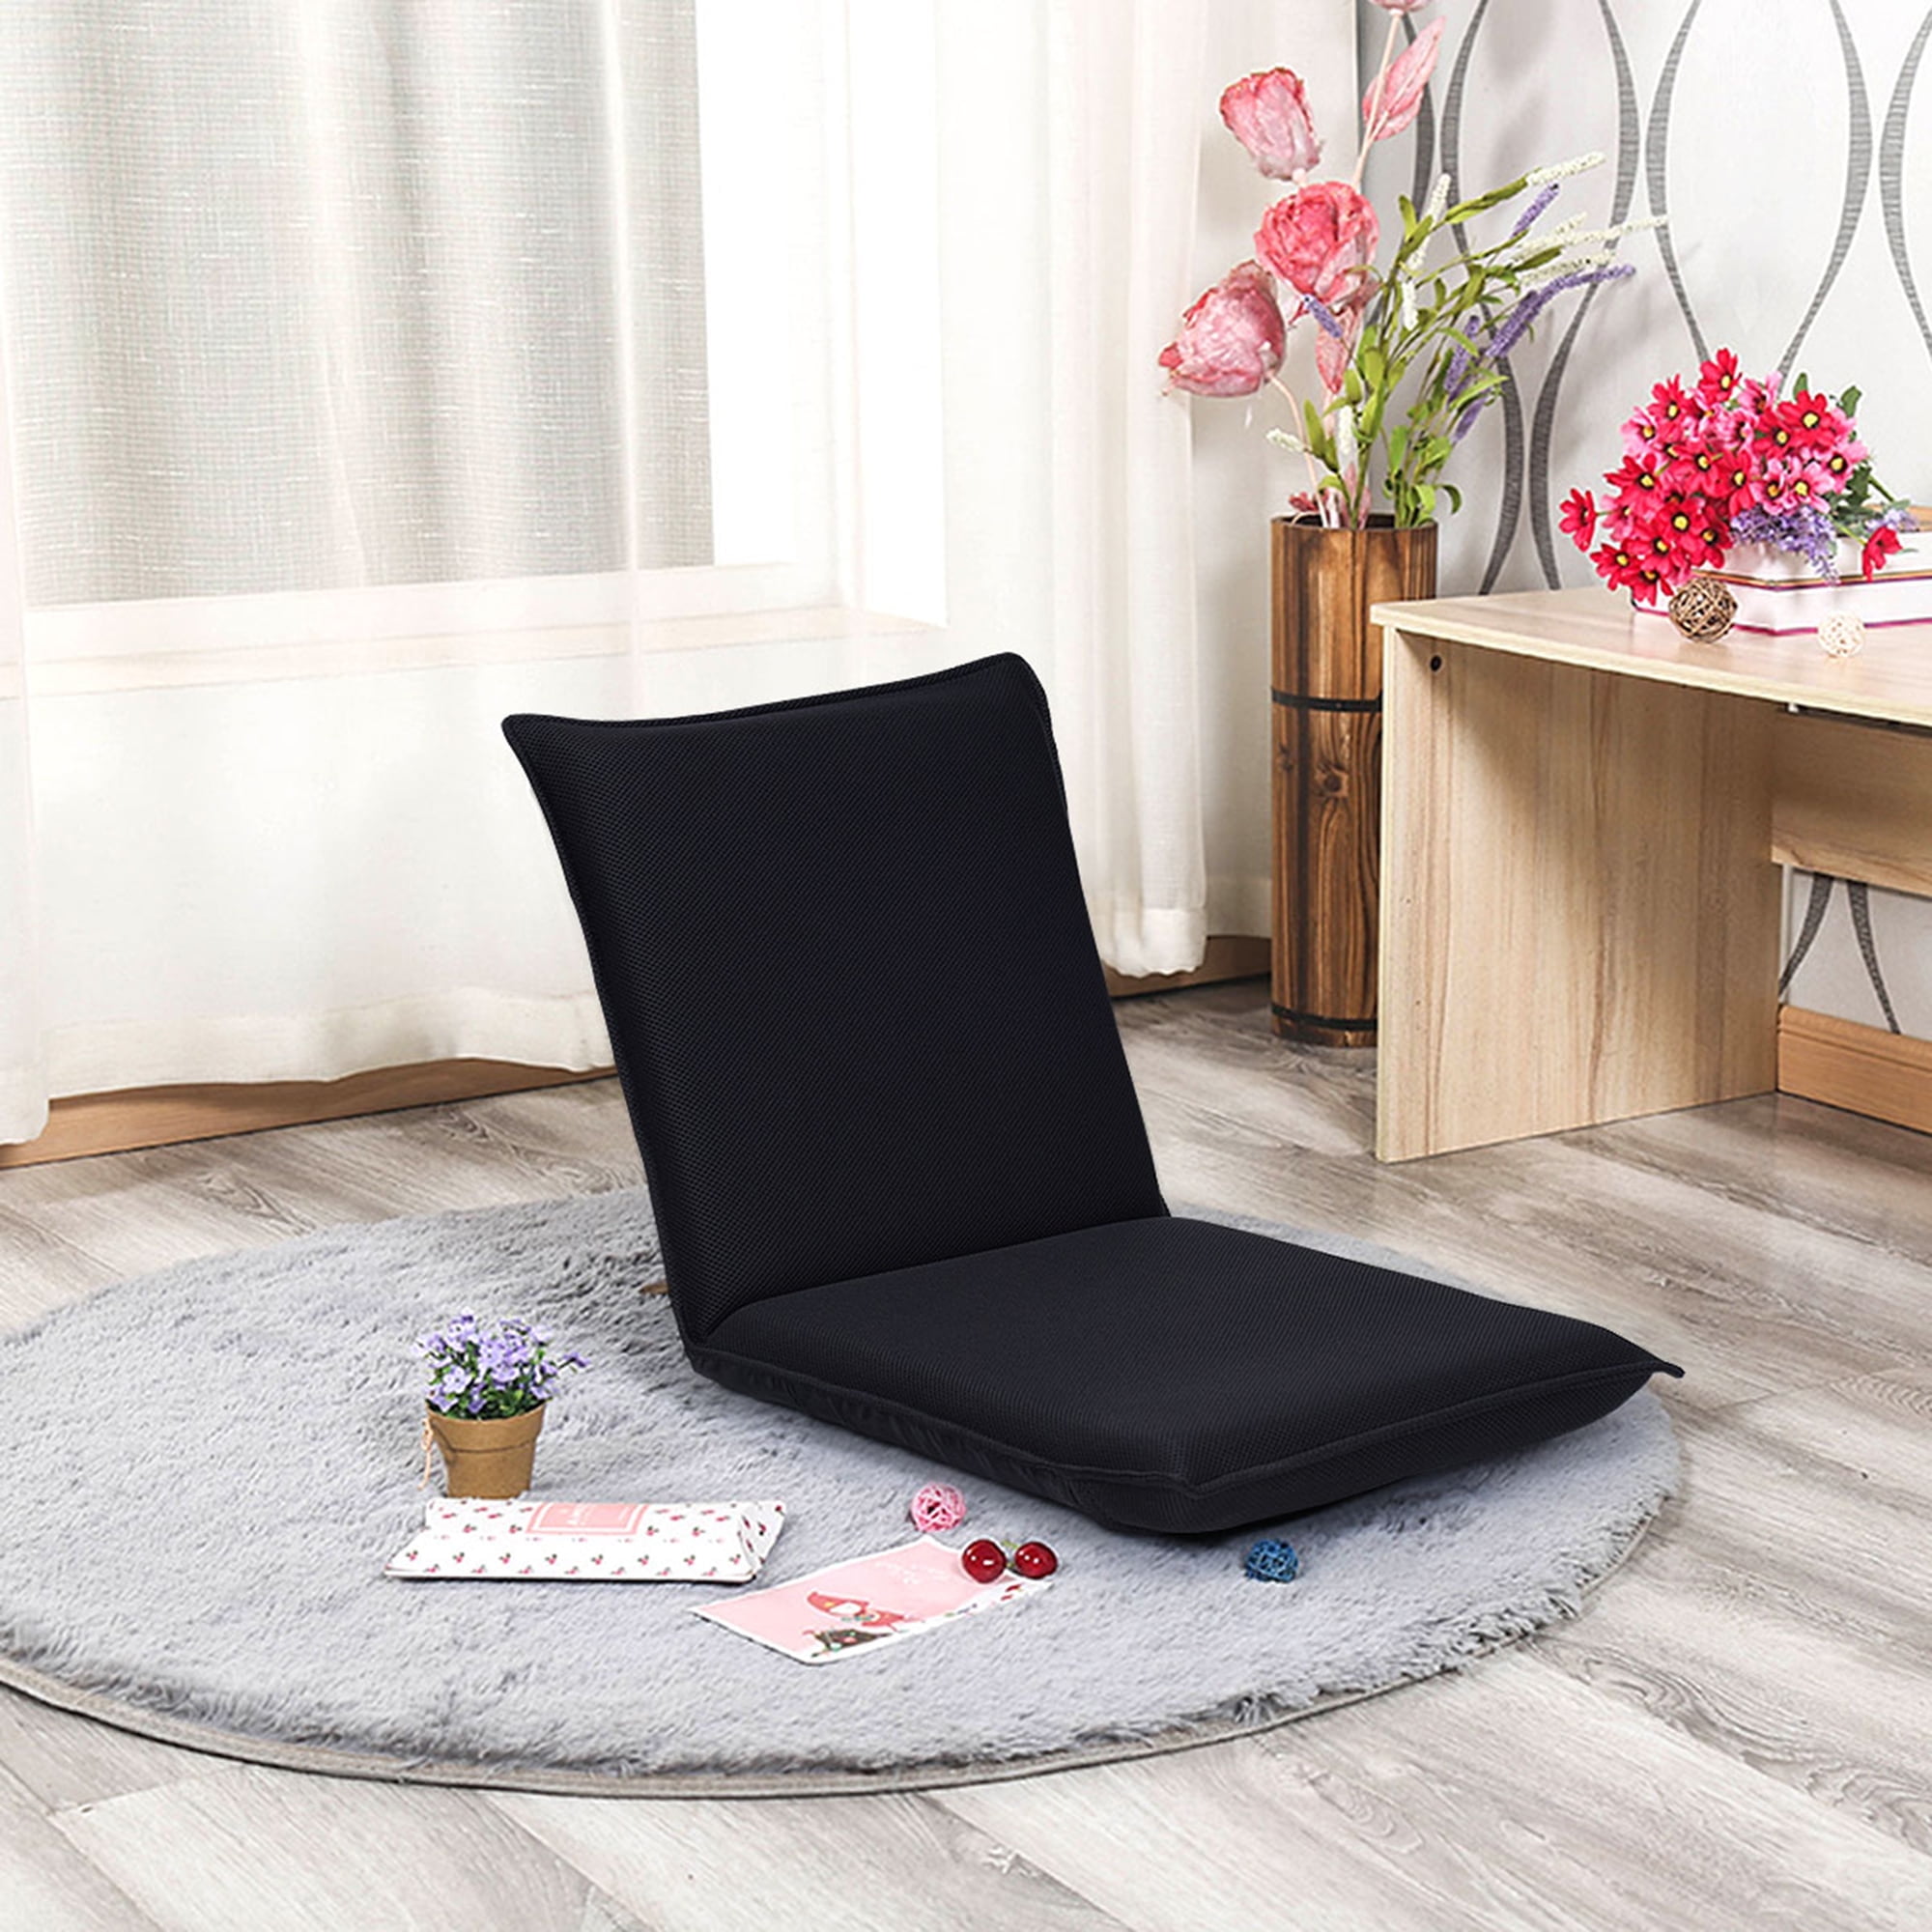  GOFLAME Adjustable Floor Chair, 6-Position Folding